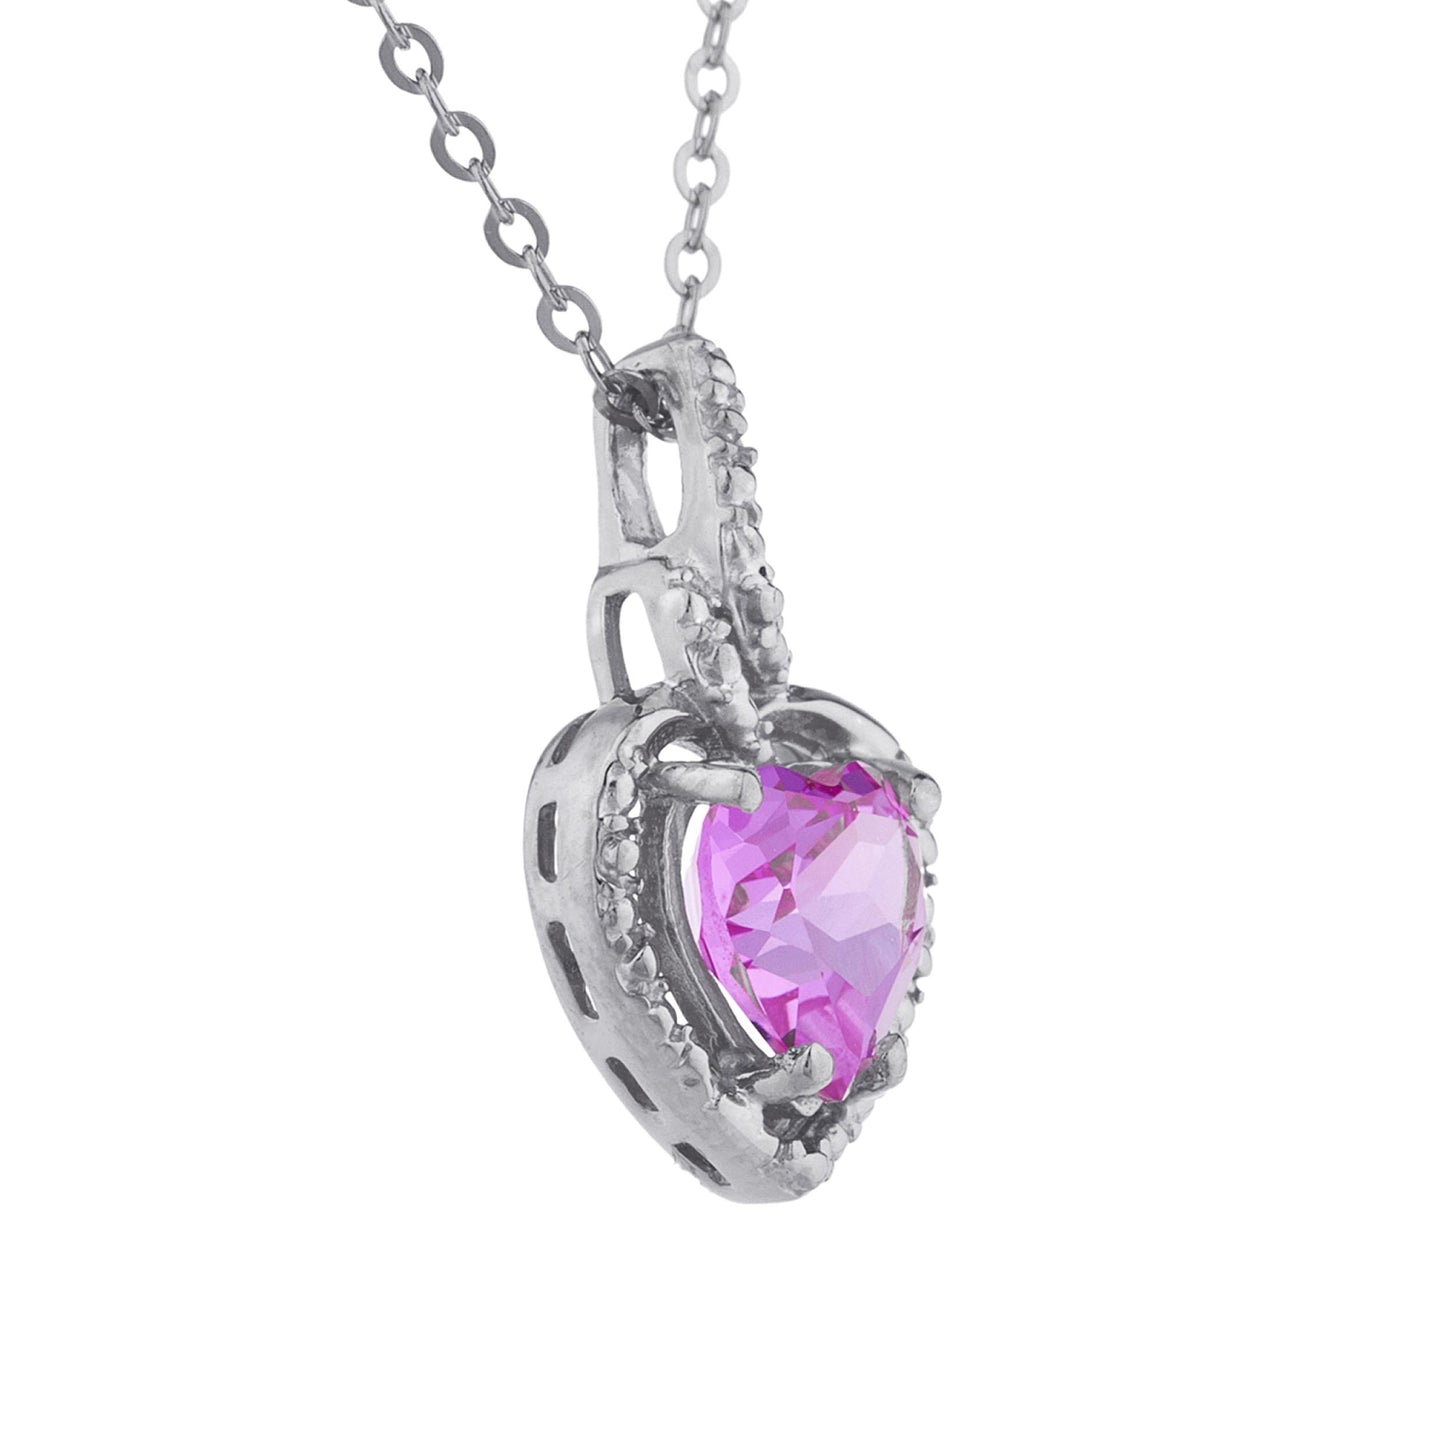 14Kt Gold Pink Sapphire Heart Design Pendant Necklace